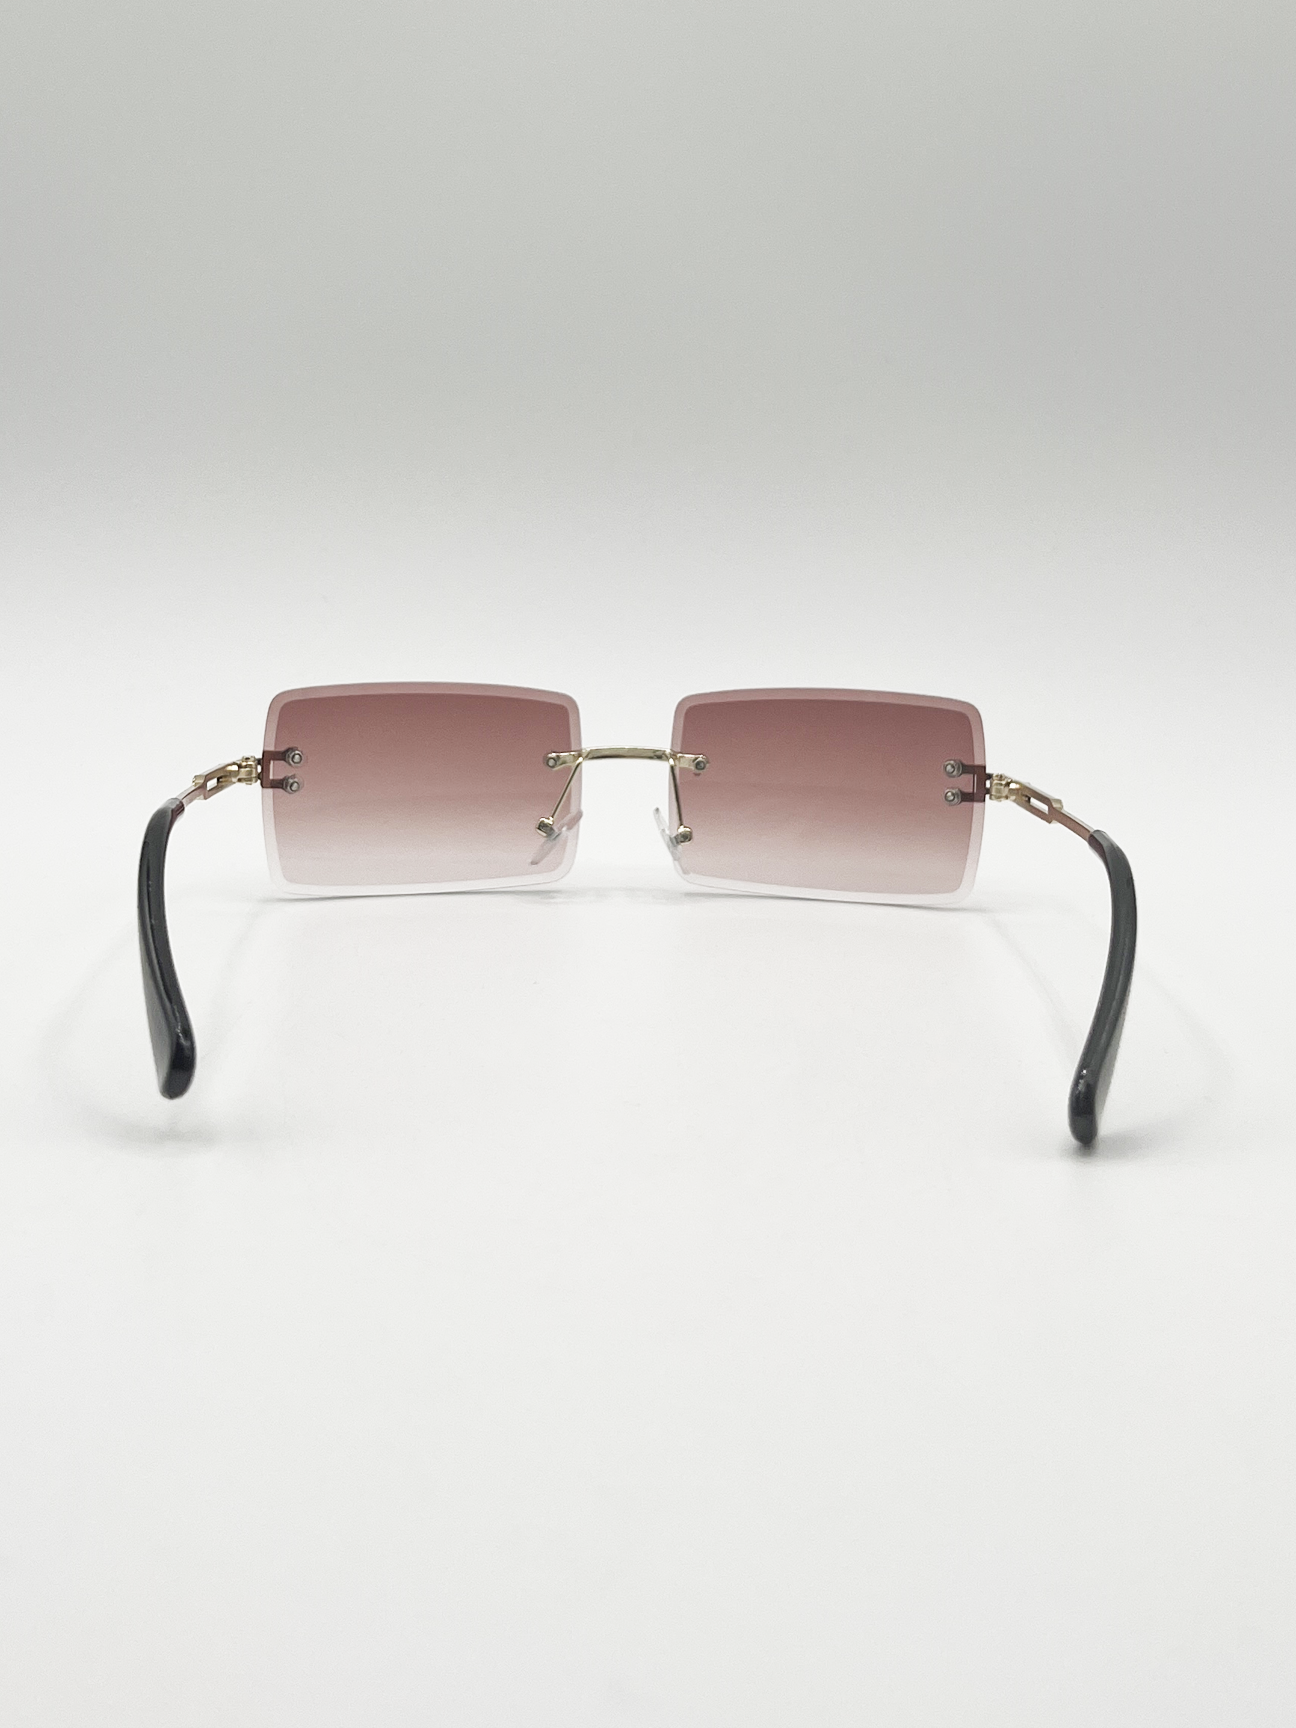 Frameless Square Sunglasses in Brown